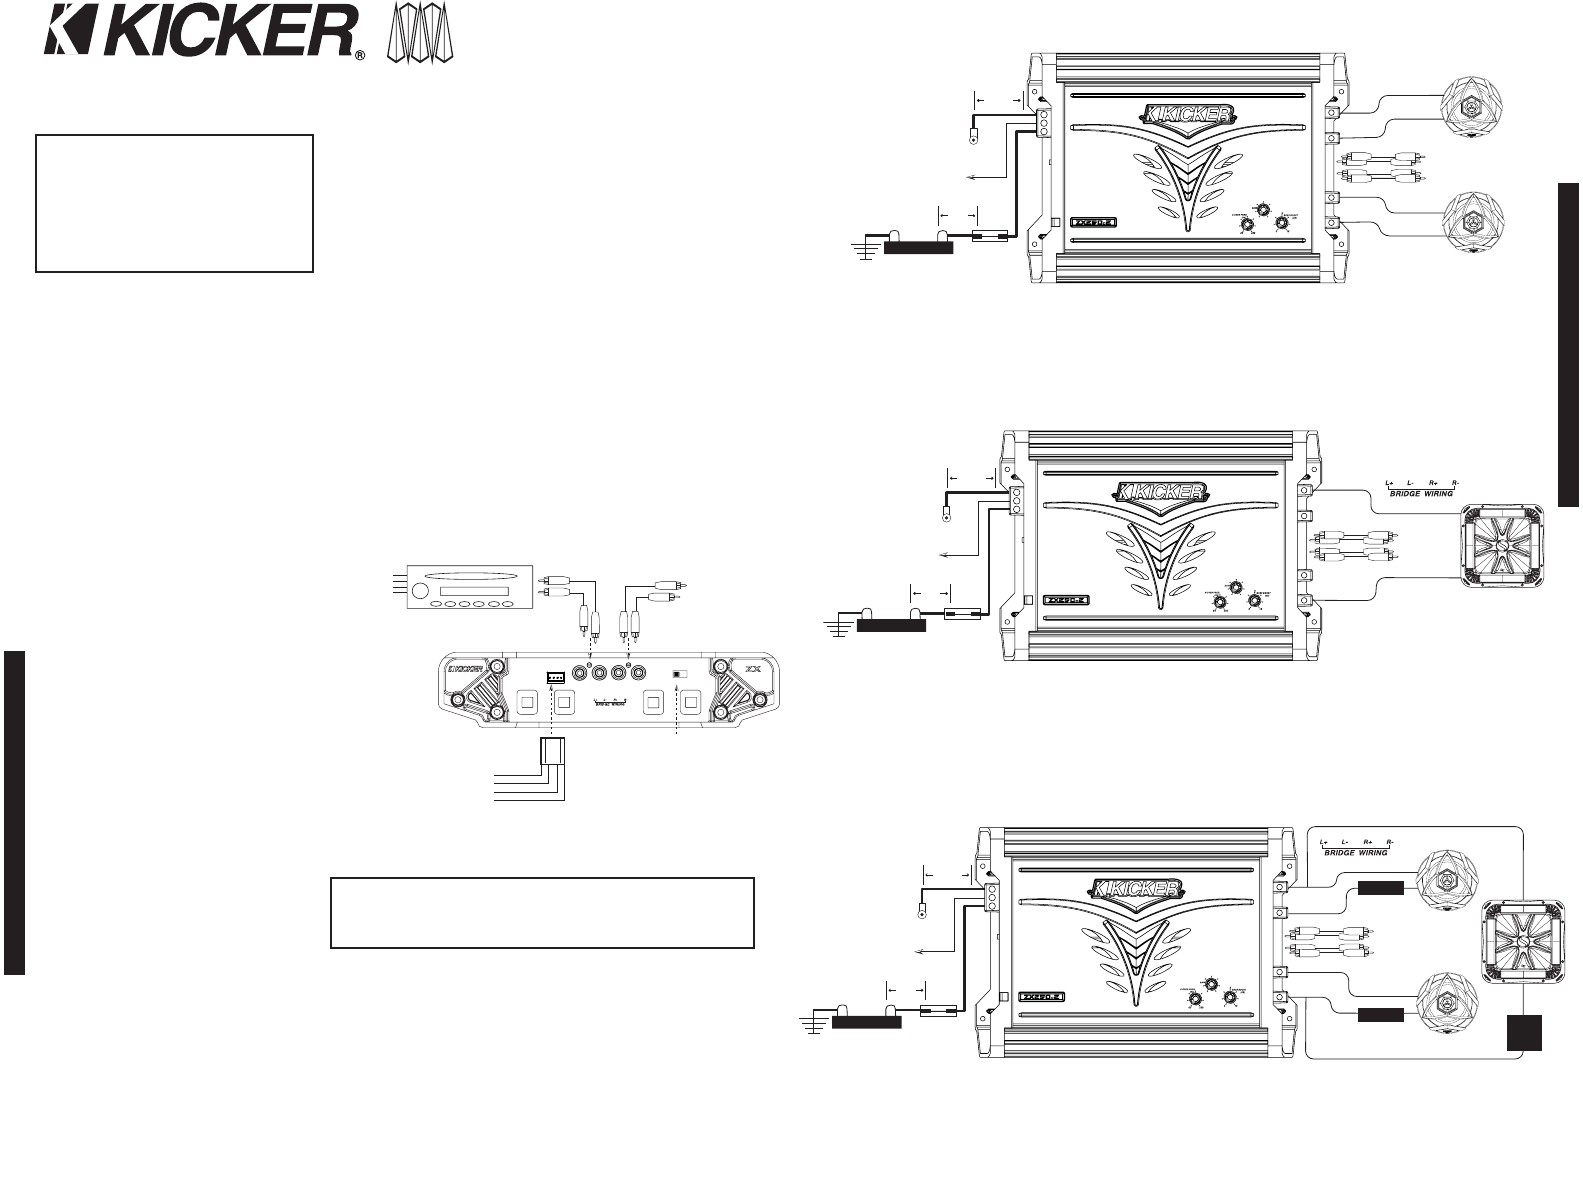 kicker bridge wiring wiring diagram fuse box u2022 rh friendsoffido co